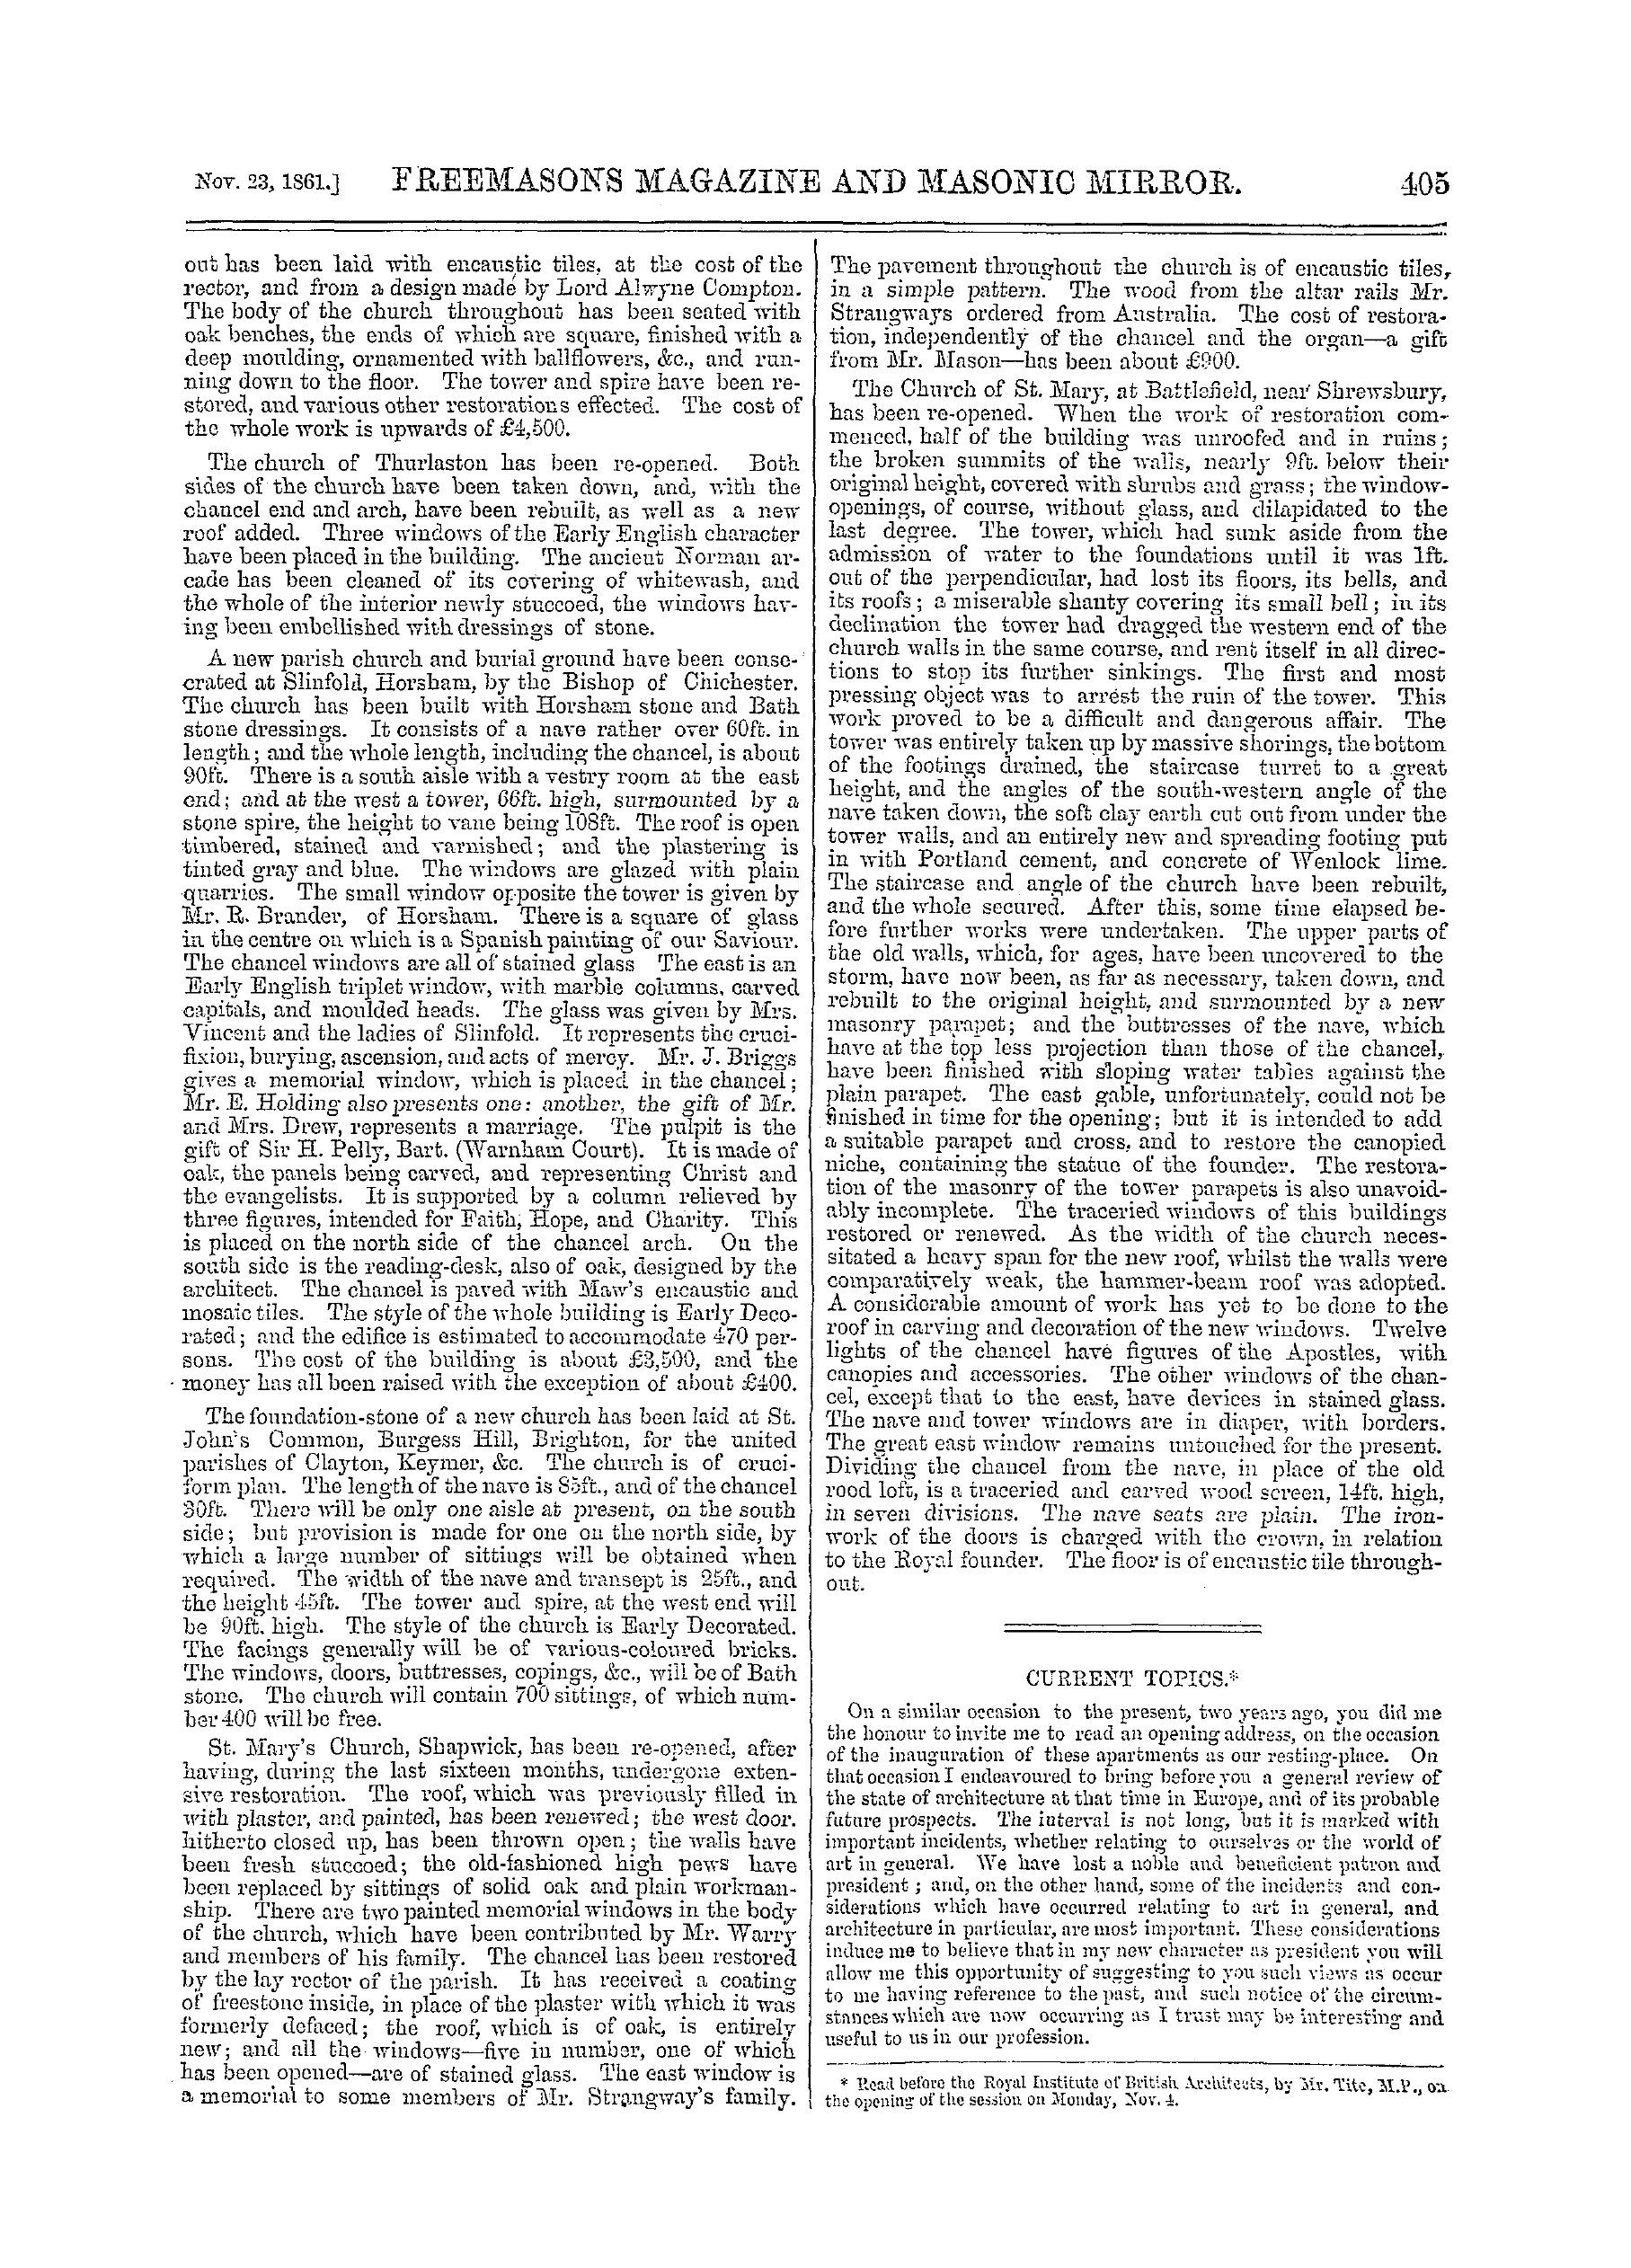 The Freemasons' Monthly Magazine: 1861-11-23 - Current Topics.*